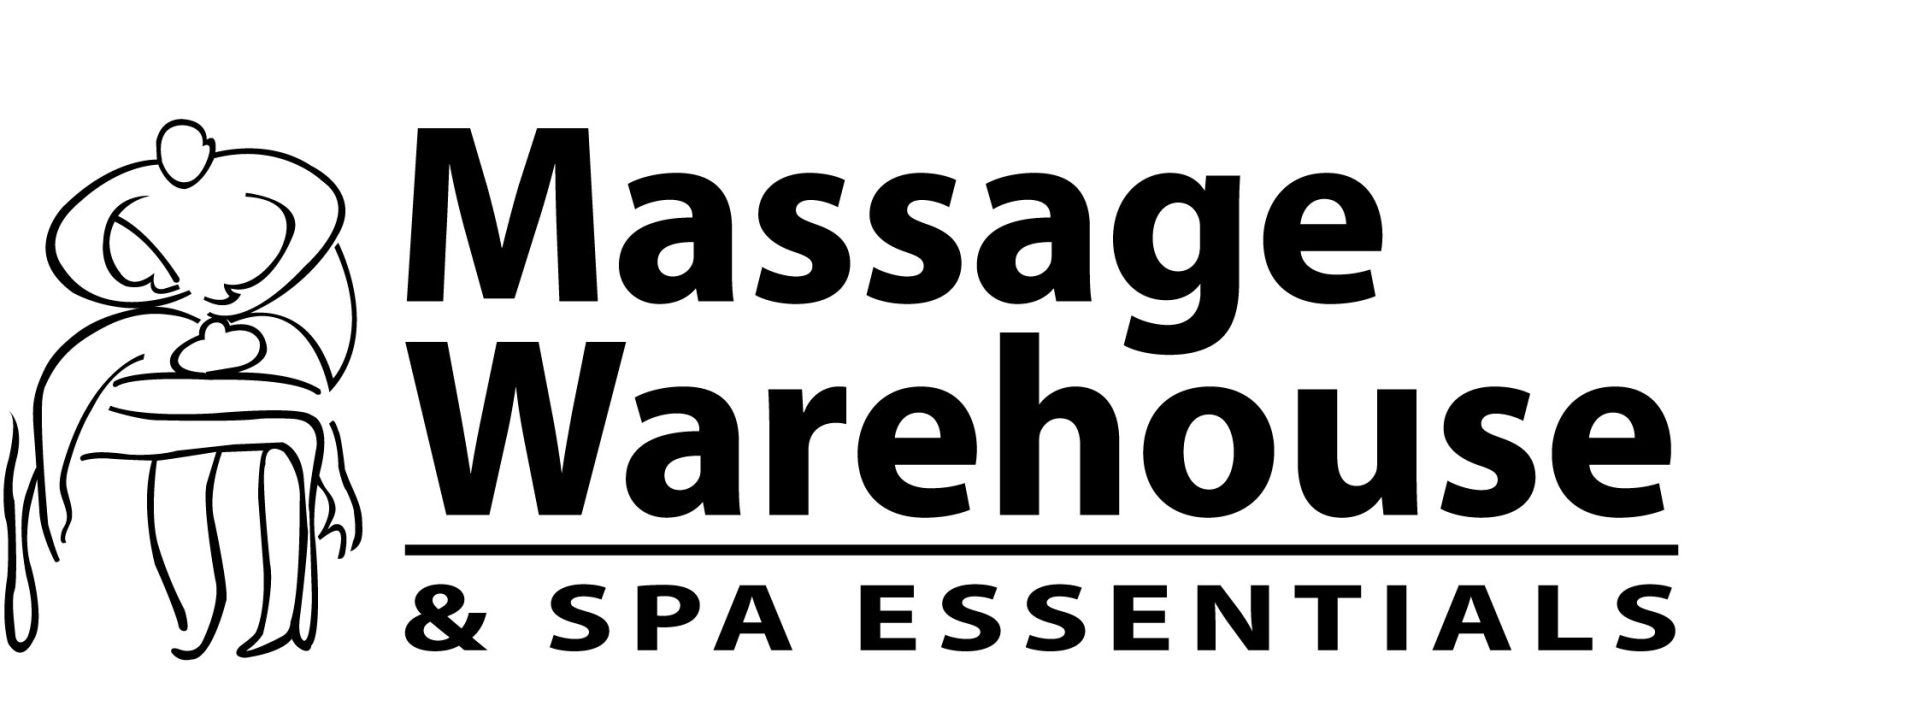 Liddle Kidz Foundation Receives Contribution from Massage Warehouse Sanctuary, MASSAGE Magazine